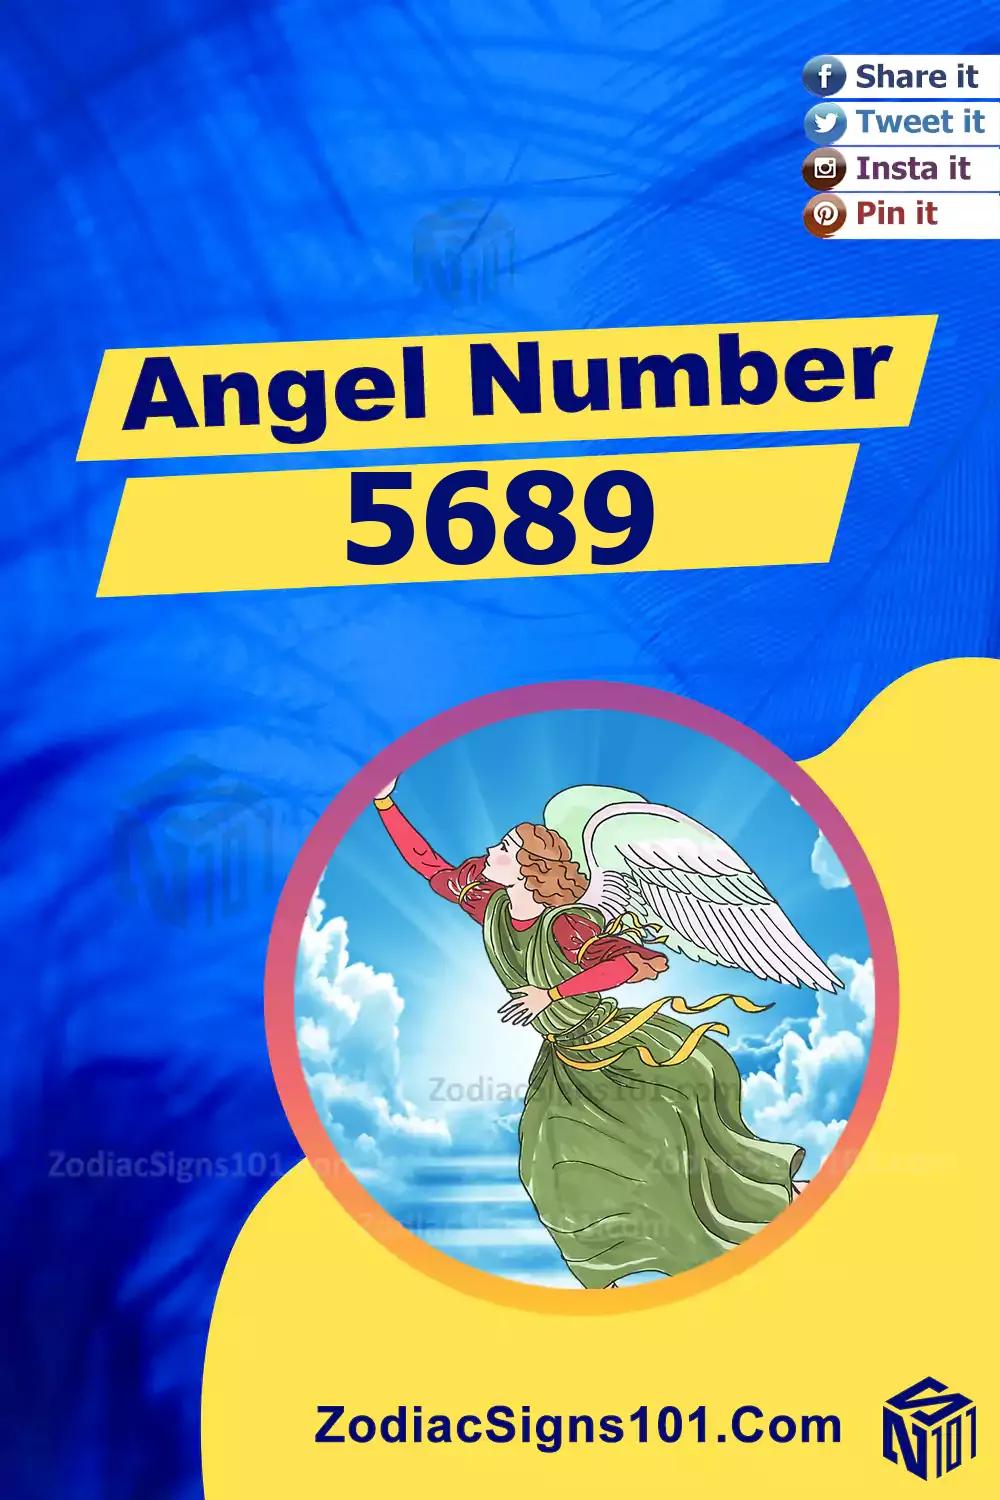 5689-Angel-Number-Meaning.jpg